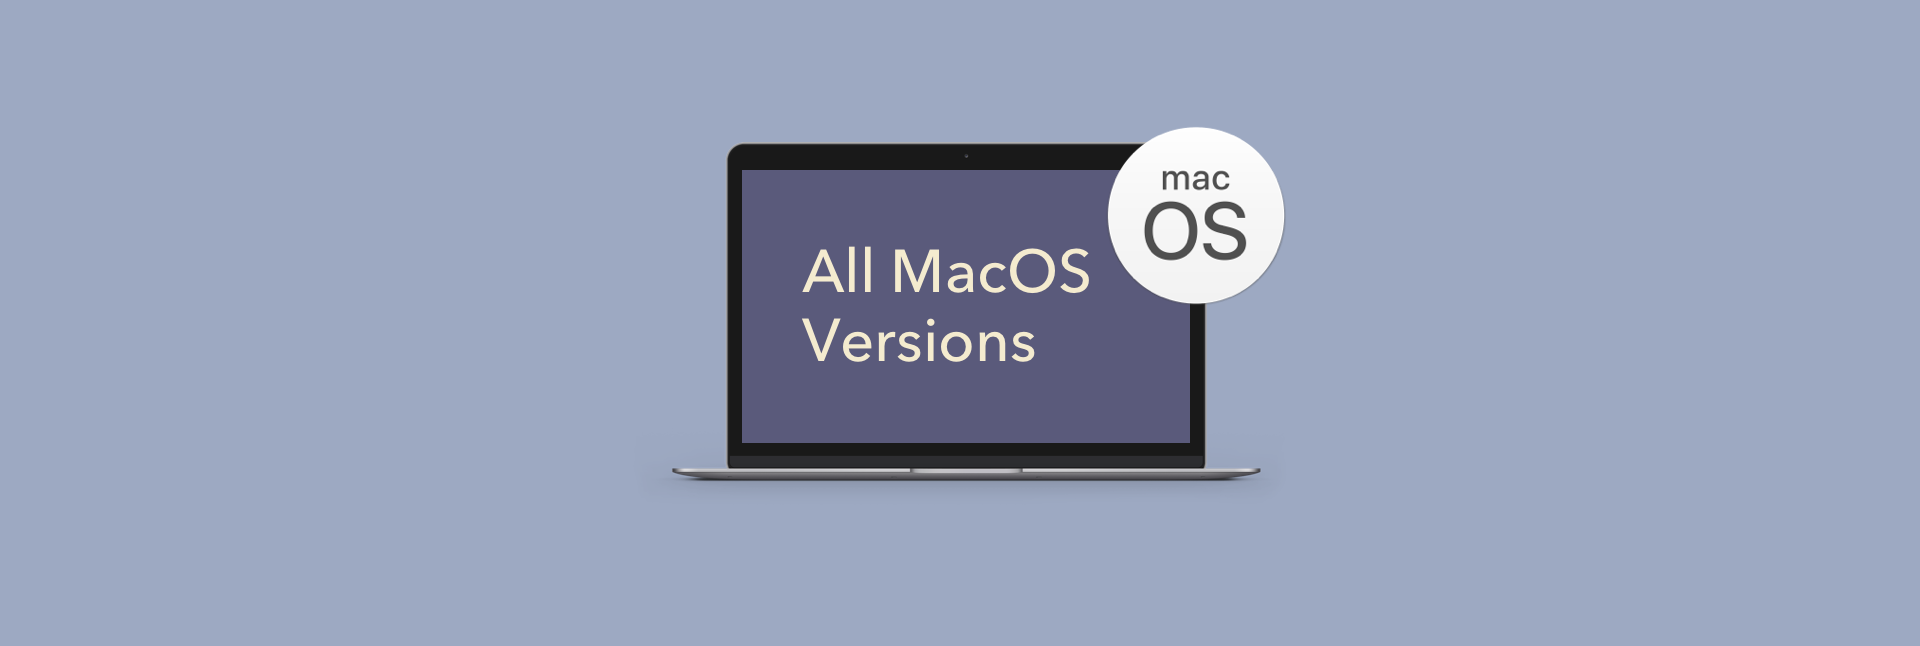 mac os list of versions